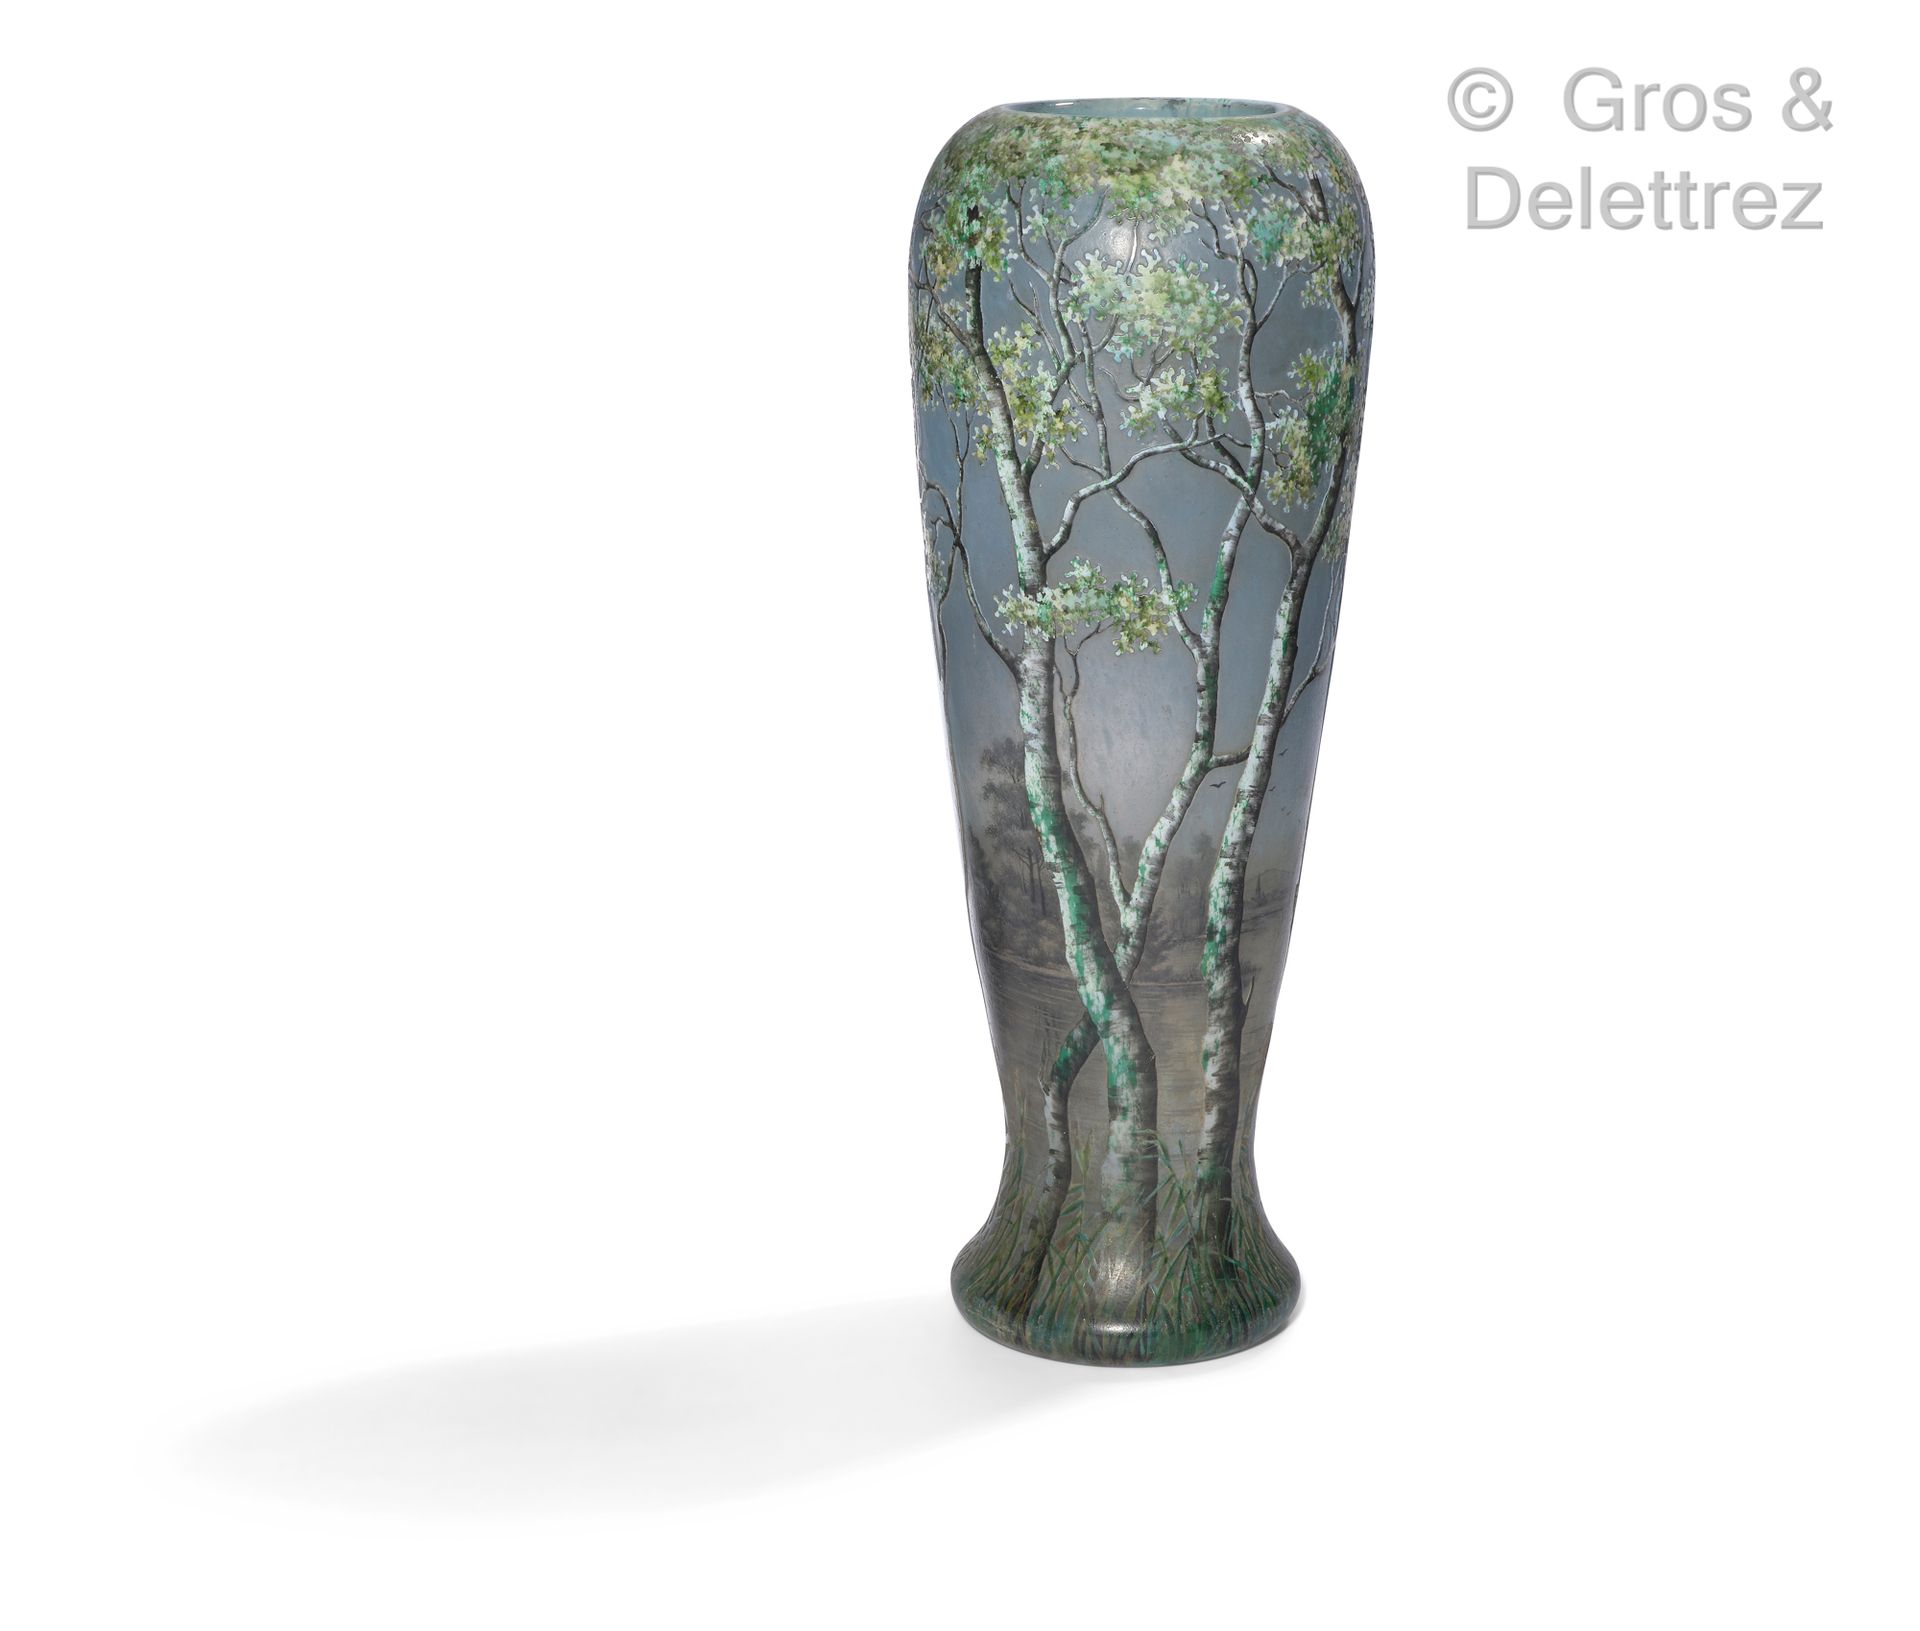 DAUM Nancy 一个有衬里的玻璃柱形花瓶，酸蚀的装饰是在蓝色背景上用格子和绿色、白色和黑色色调的树木装饰的湖景。

签名为Daum Nancy。

大约1&hellip;